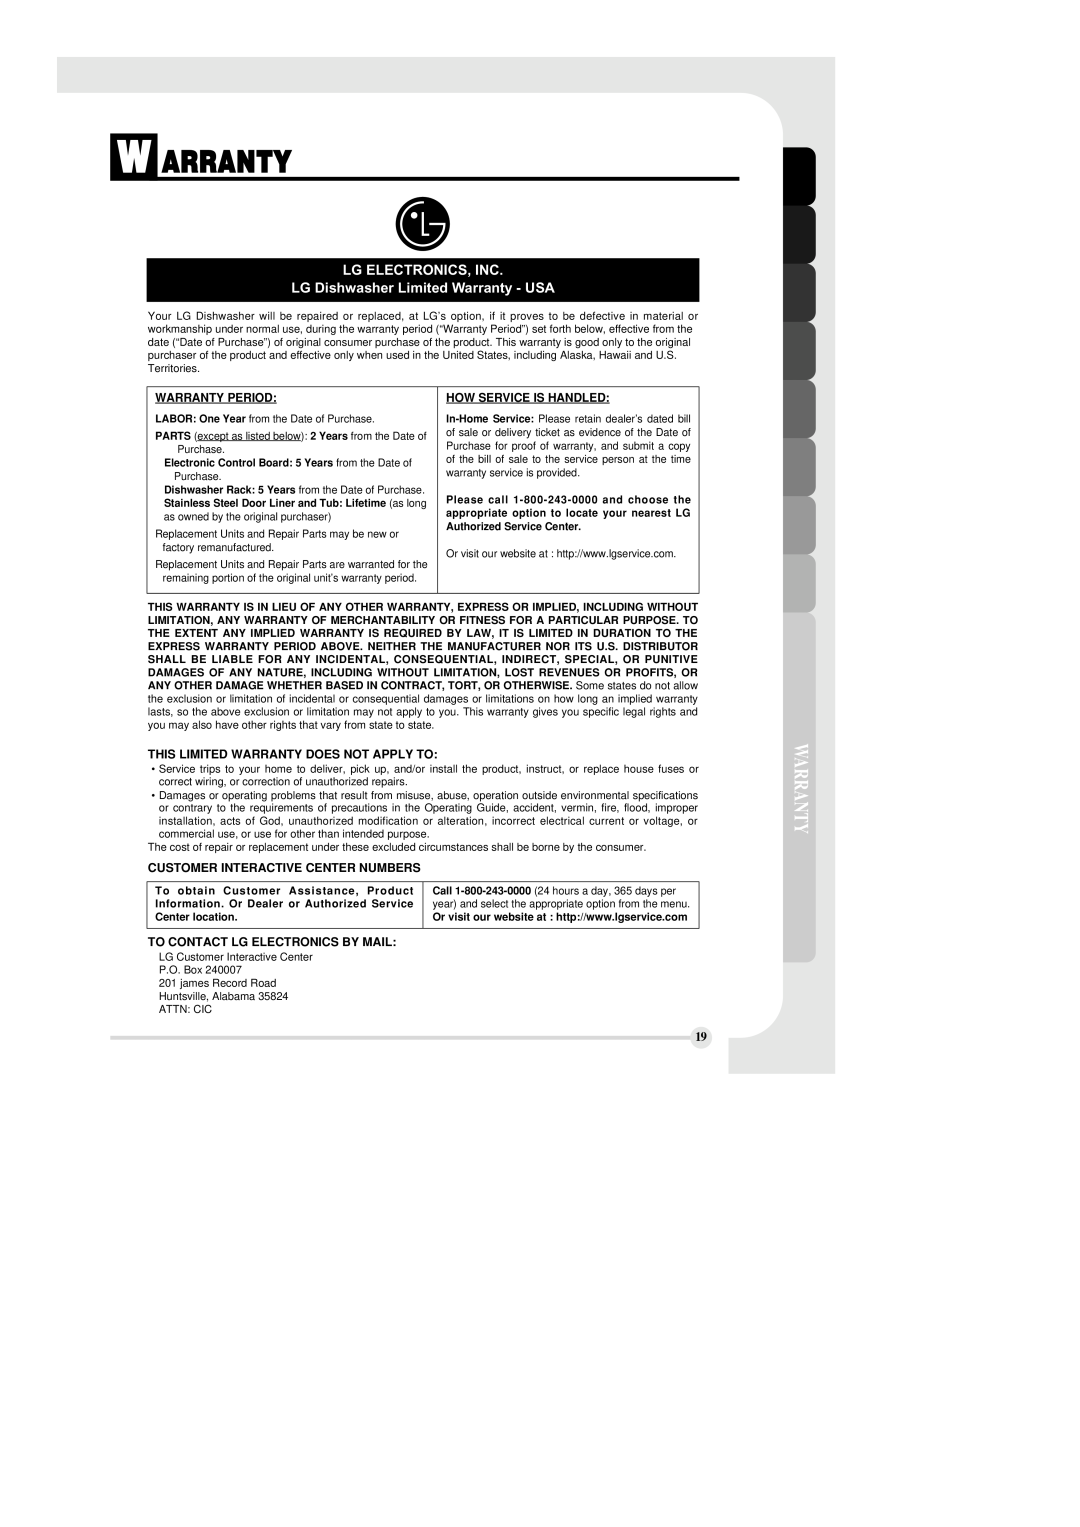 LG Electronics LDF6810ST manual W Arranty, Lg Electronics, Inc, LG Dishwasher Limited Warranty - USA, Warranty Period 